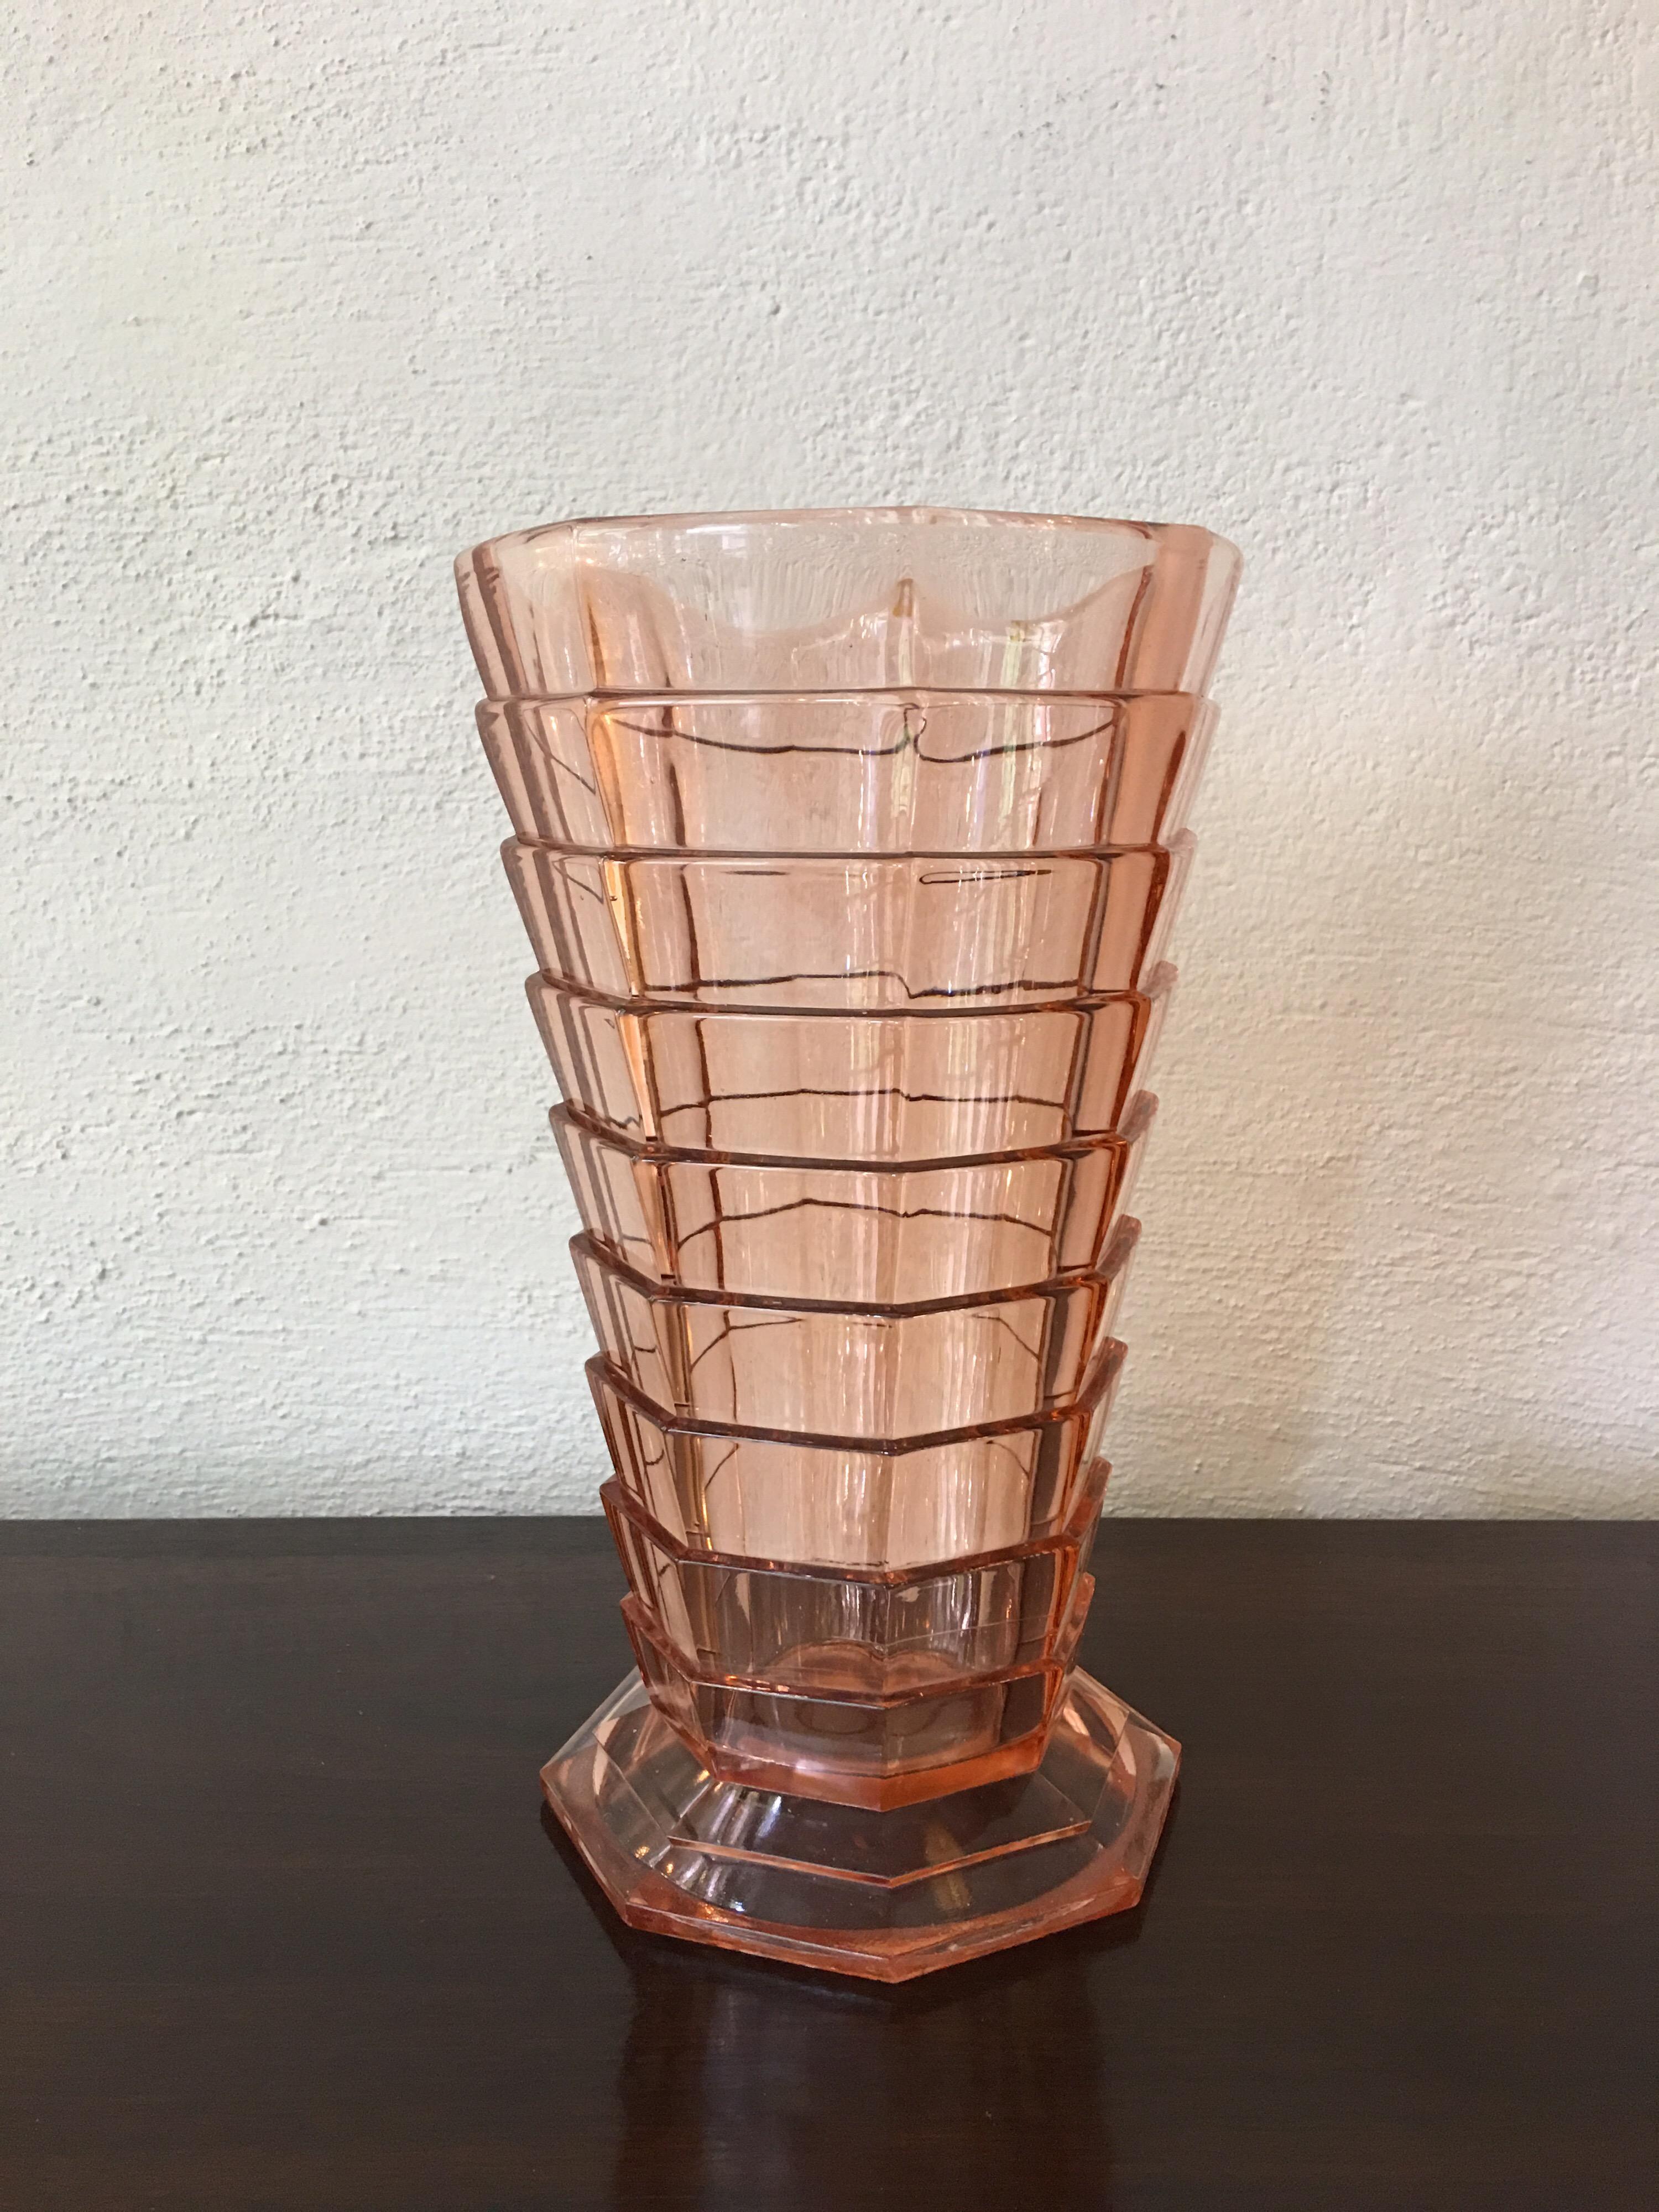 Large Indiana tea room depression glass vase. Nice size, great deco design!